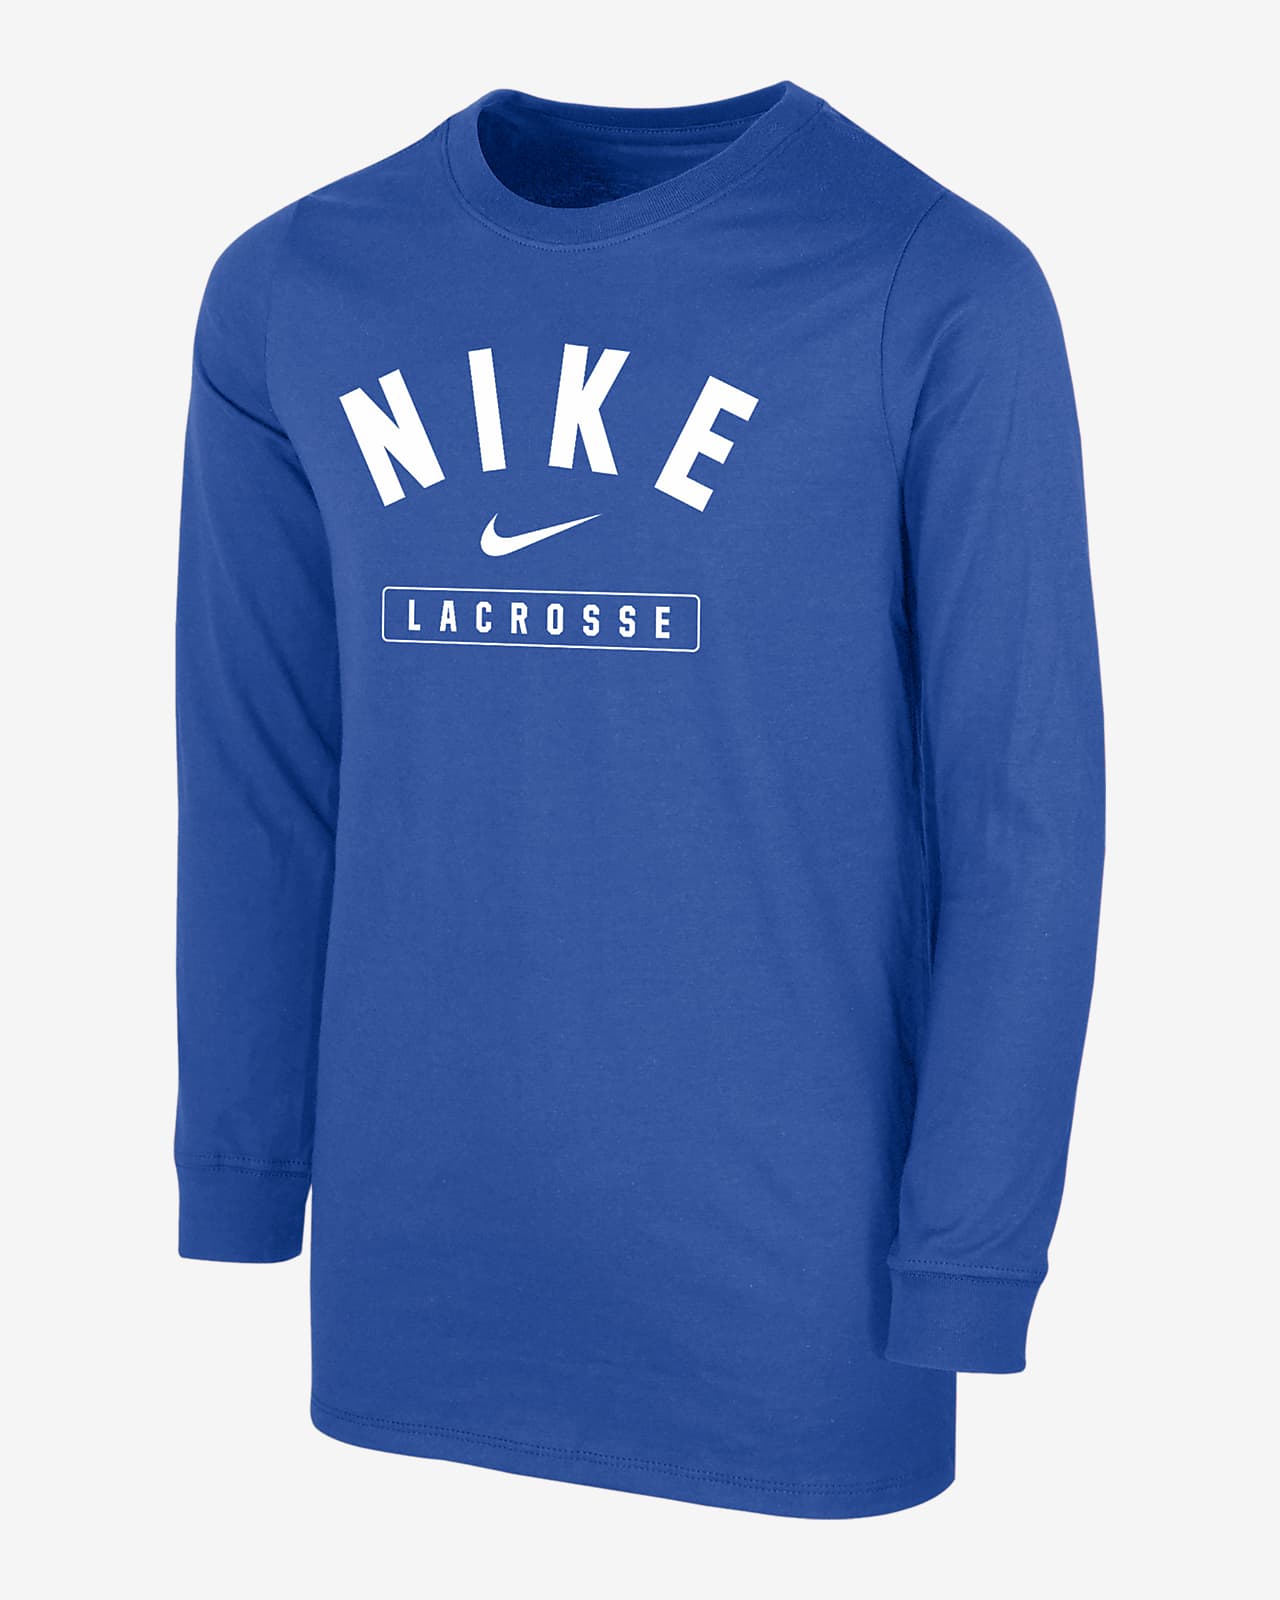 Nike Lacrosse Big Kids' (Boys') Long-Sleeve T-Shirt